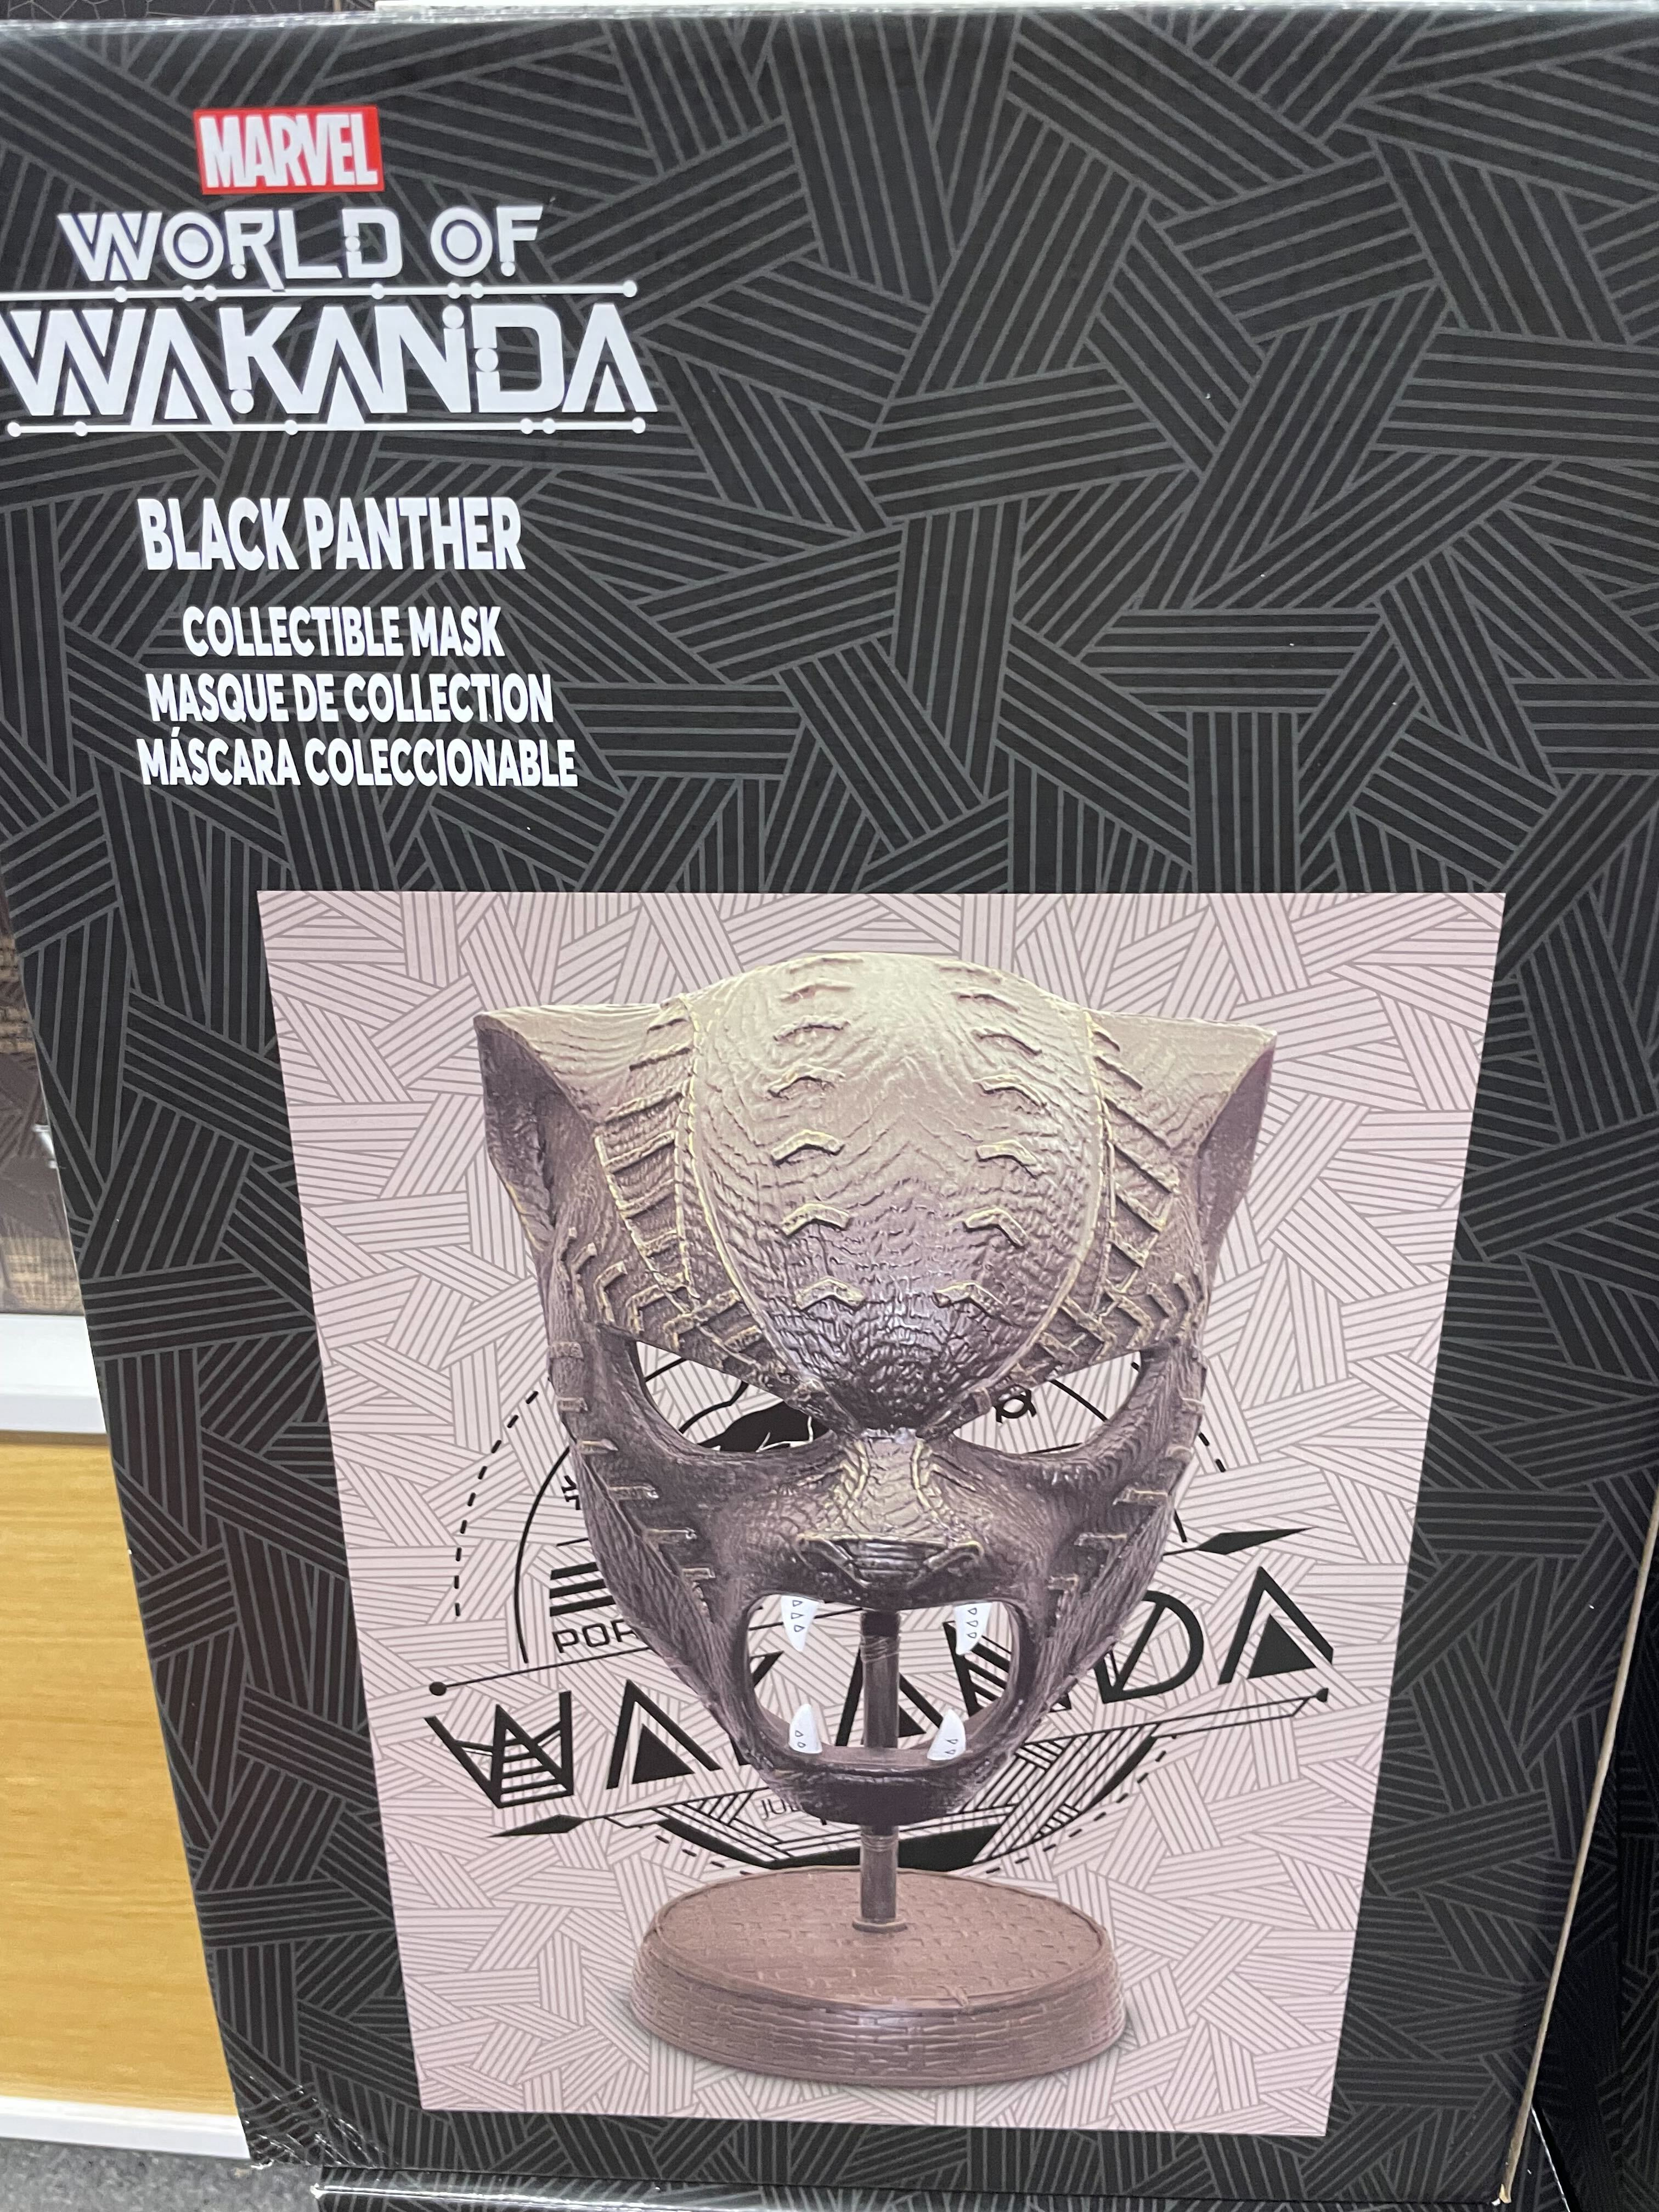 Black Panther: World of Wakanda shopDisney booth